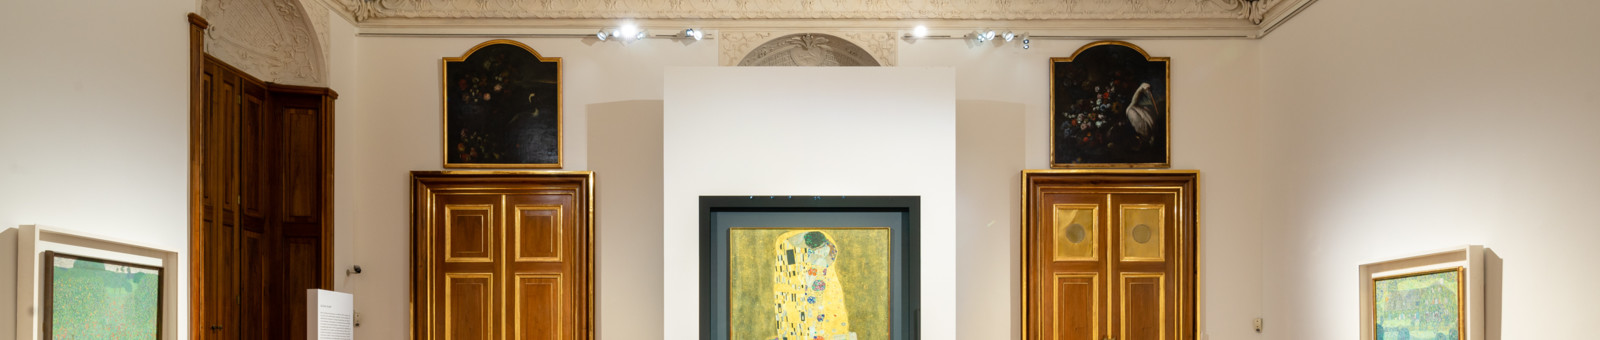     Interior view of the Upper Belvedere, showing Gustav Klimt's "Kiss" 